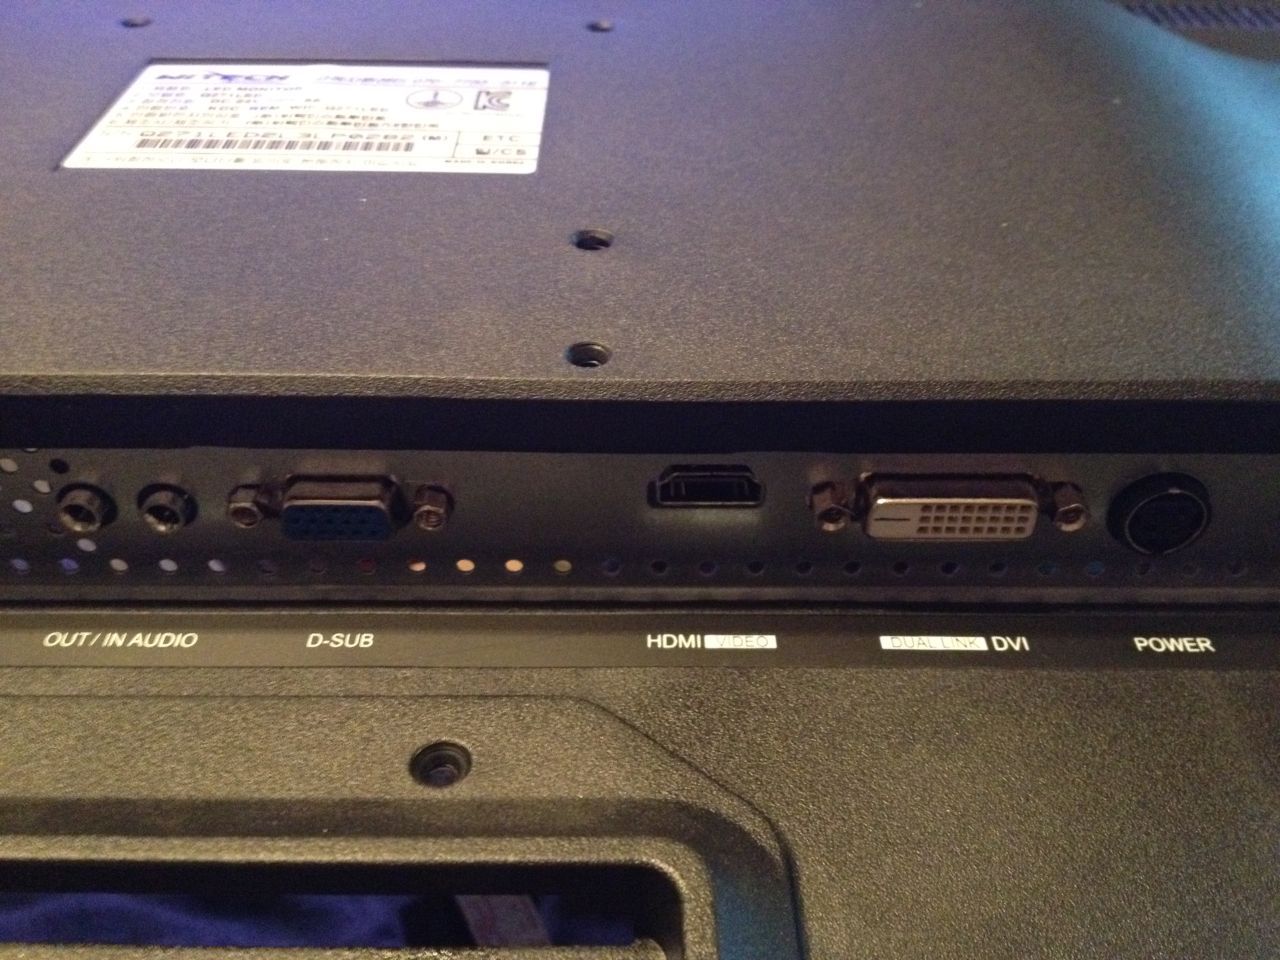 DVI, HDMI and VGA inputs, mic and power